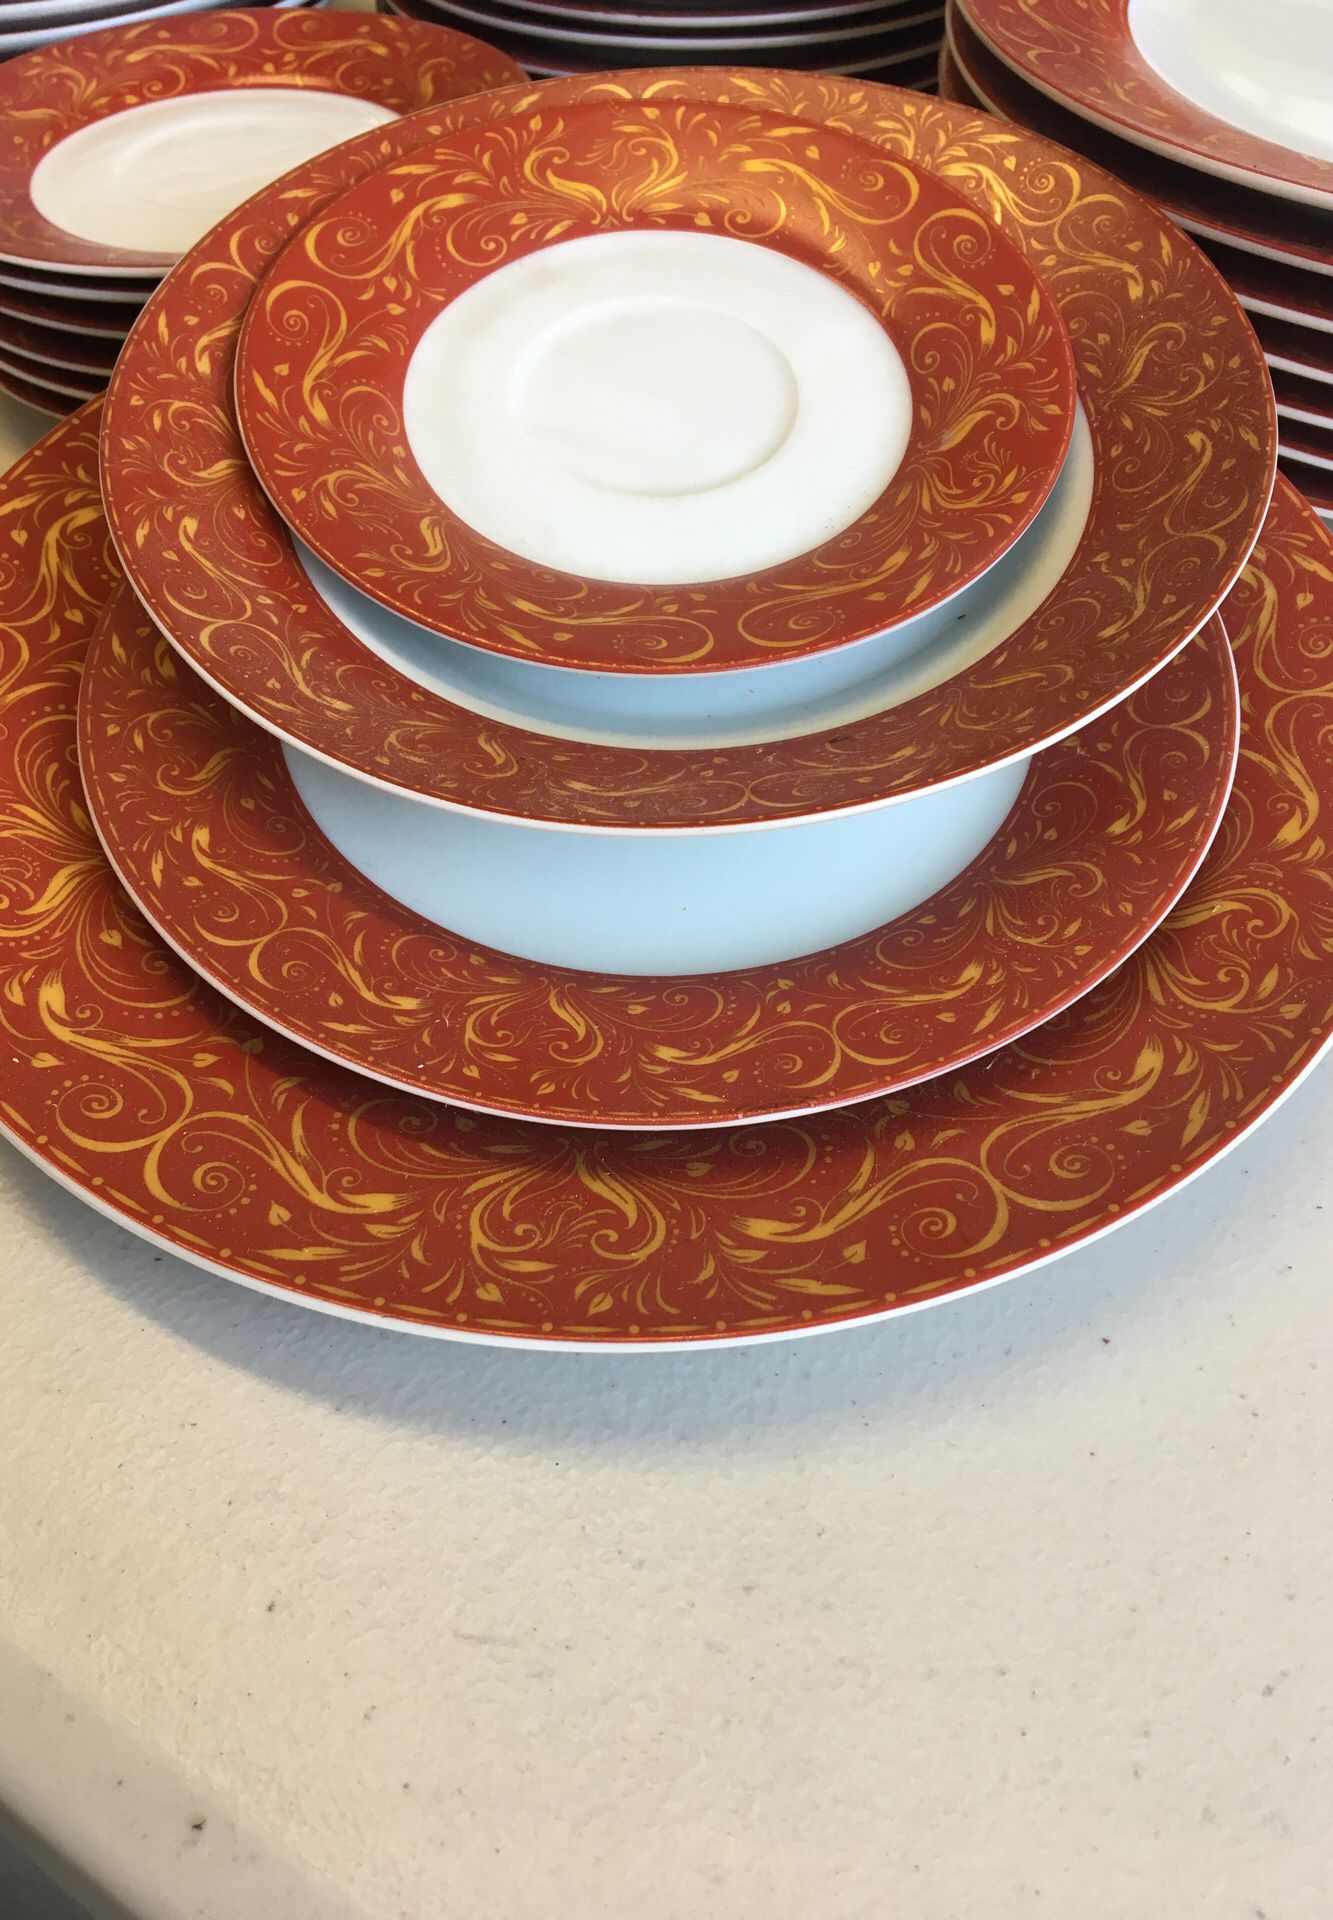 Kitchen plates